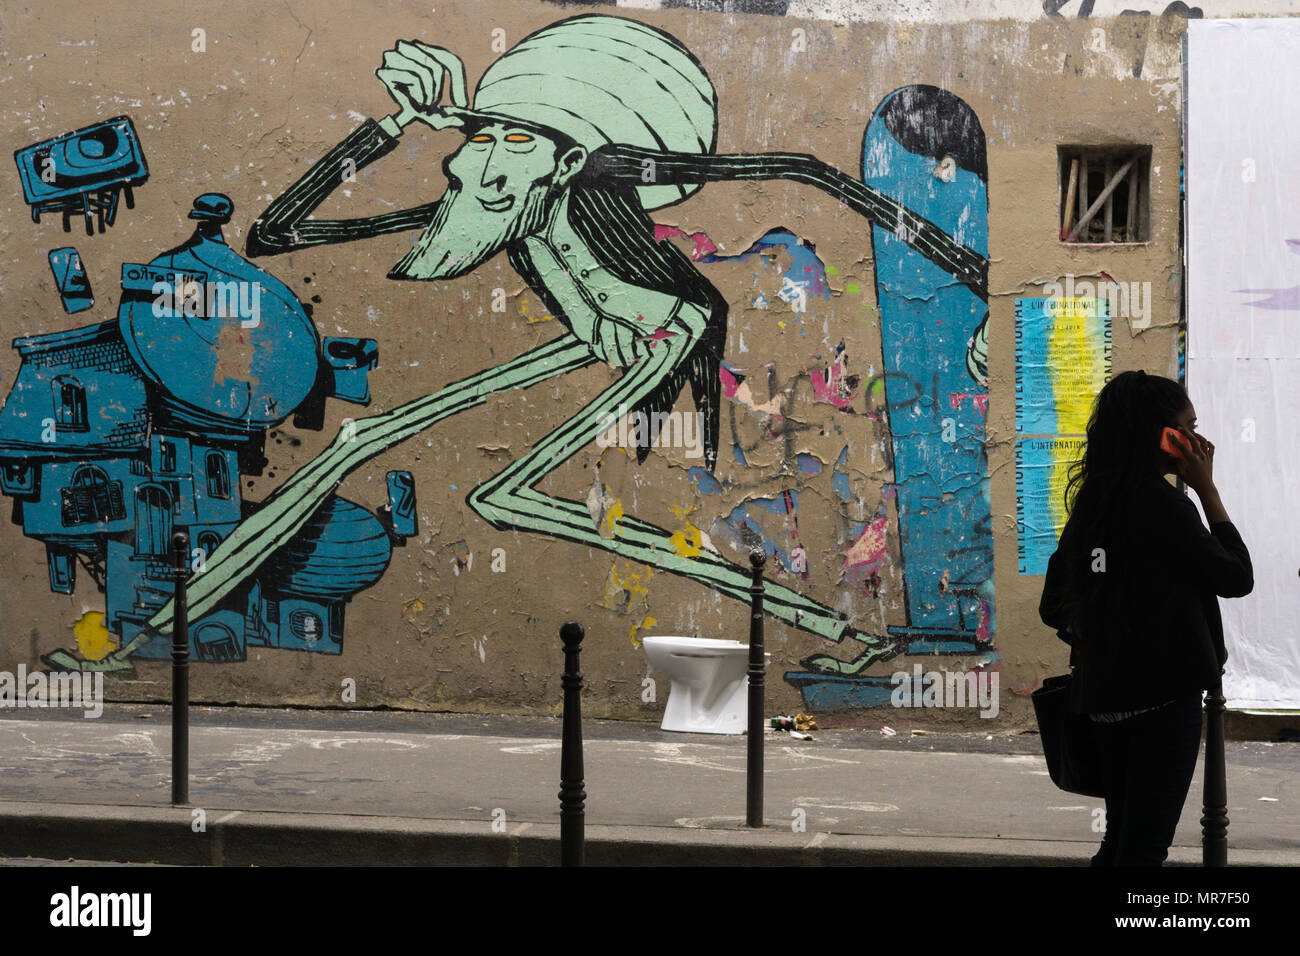 L'art de rue dans la zone d'Oberkampf à Paris, France. Banque D'Images